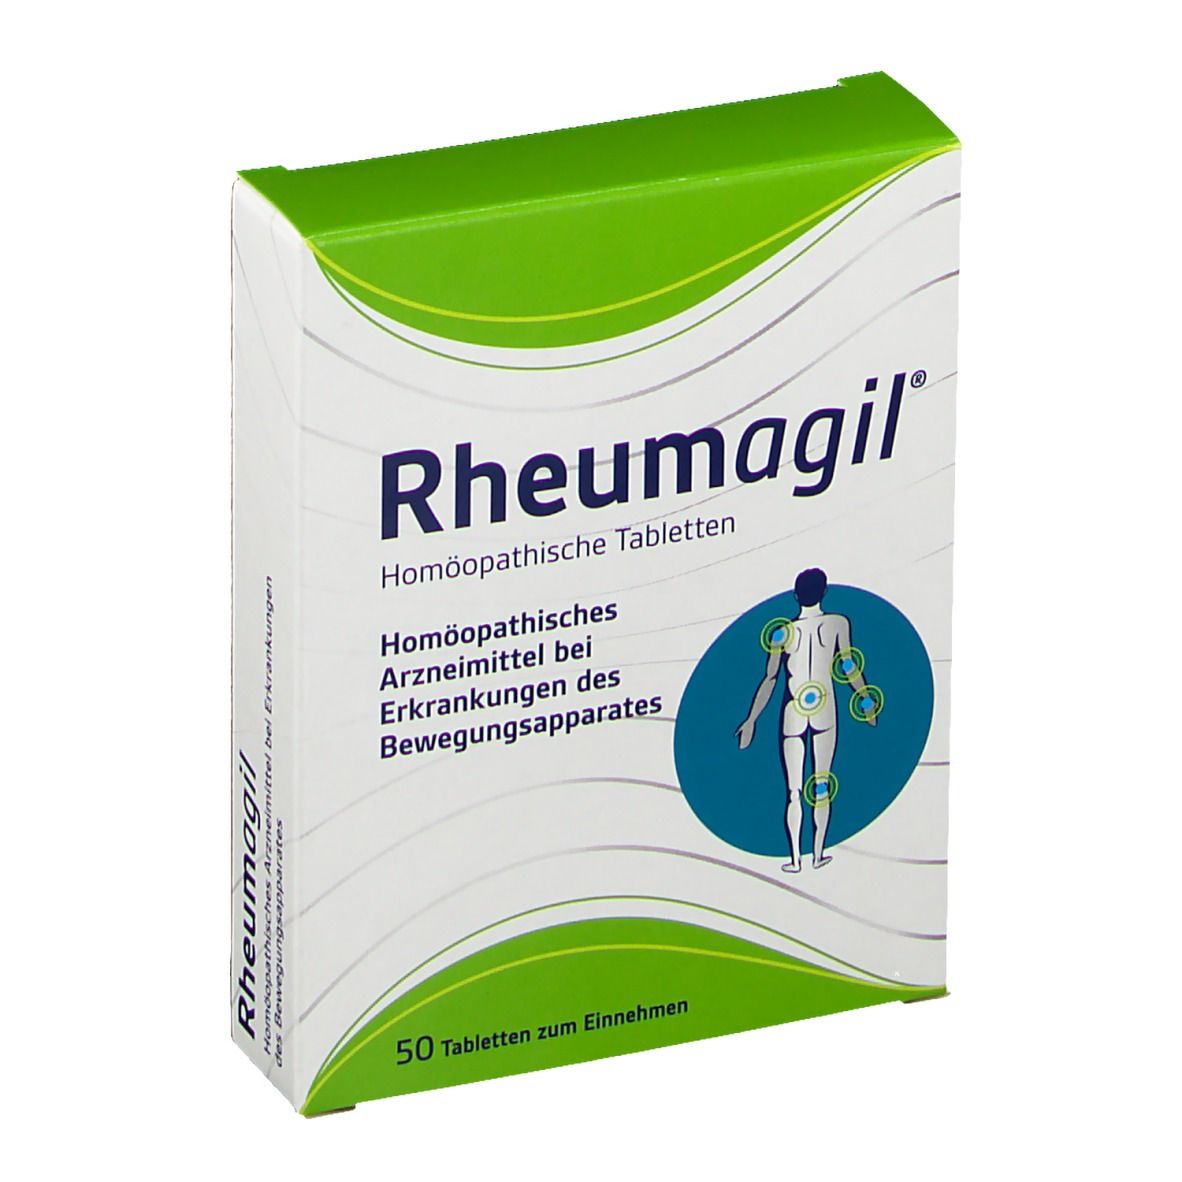 RHEUMAGIL® natürliches Arzneimittel bei Rheuma Fibromyalgie